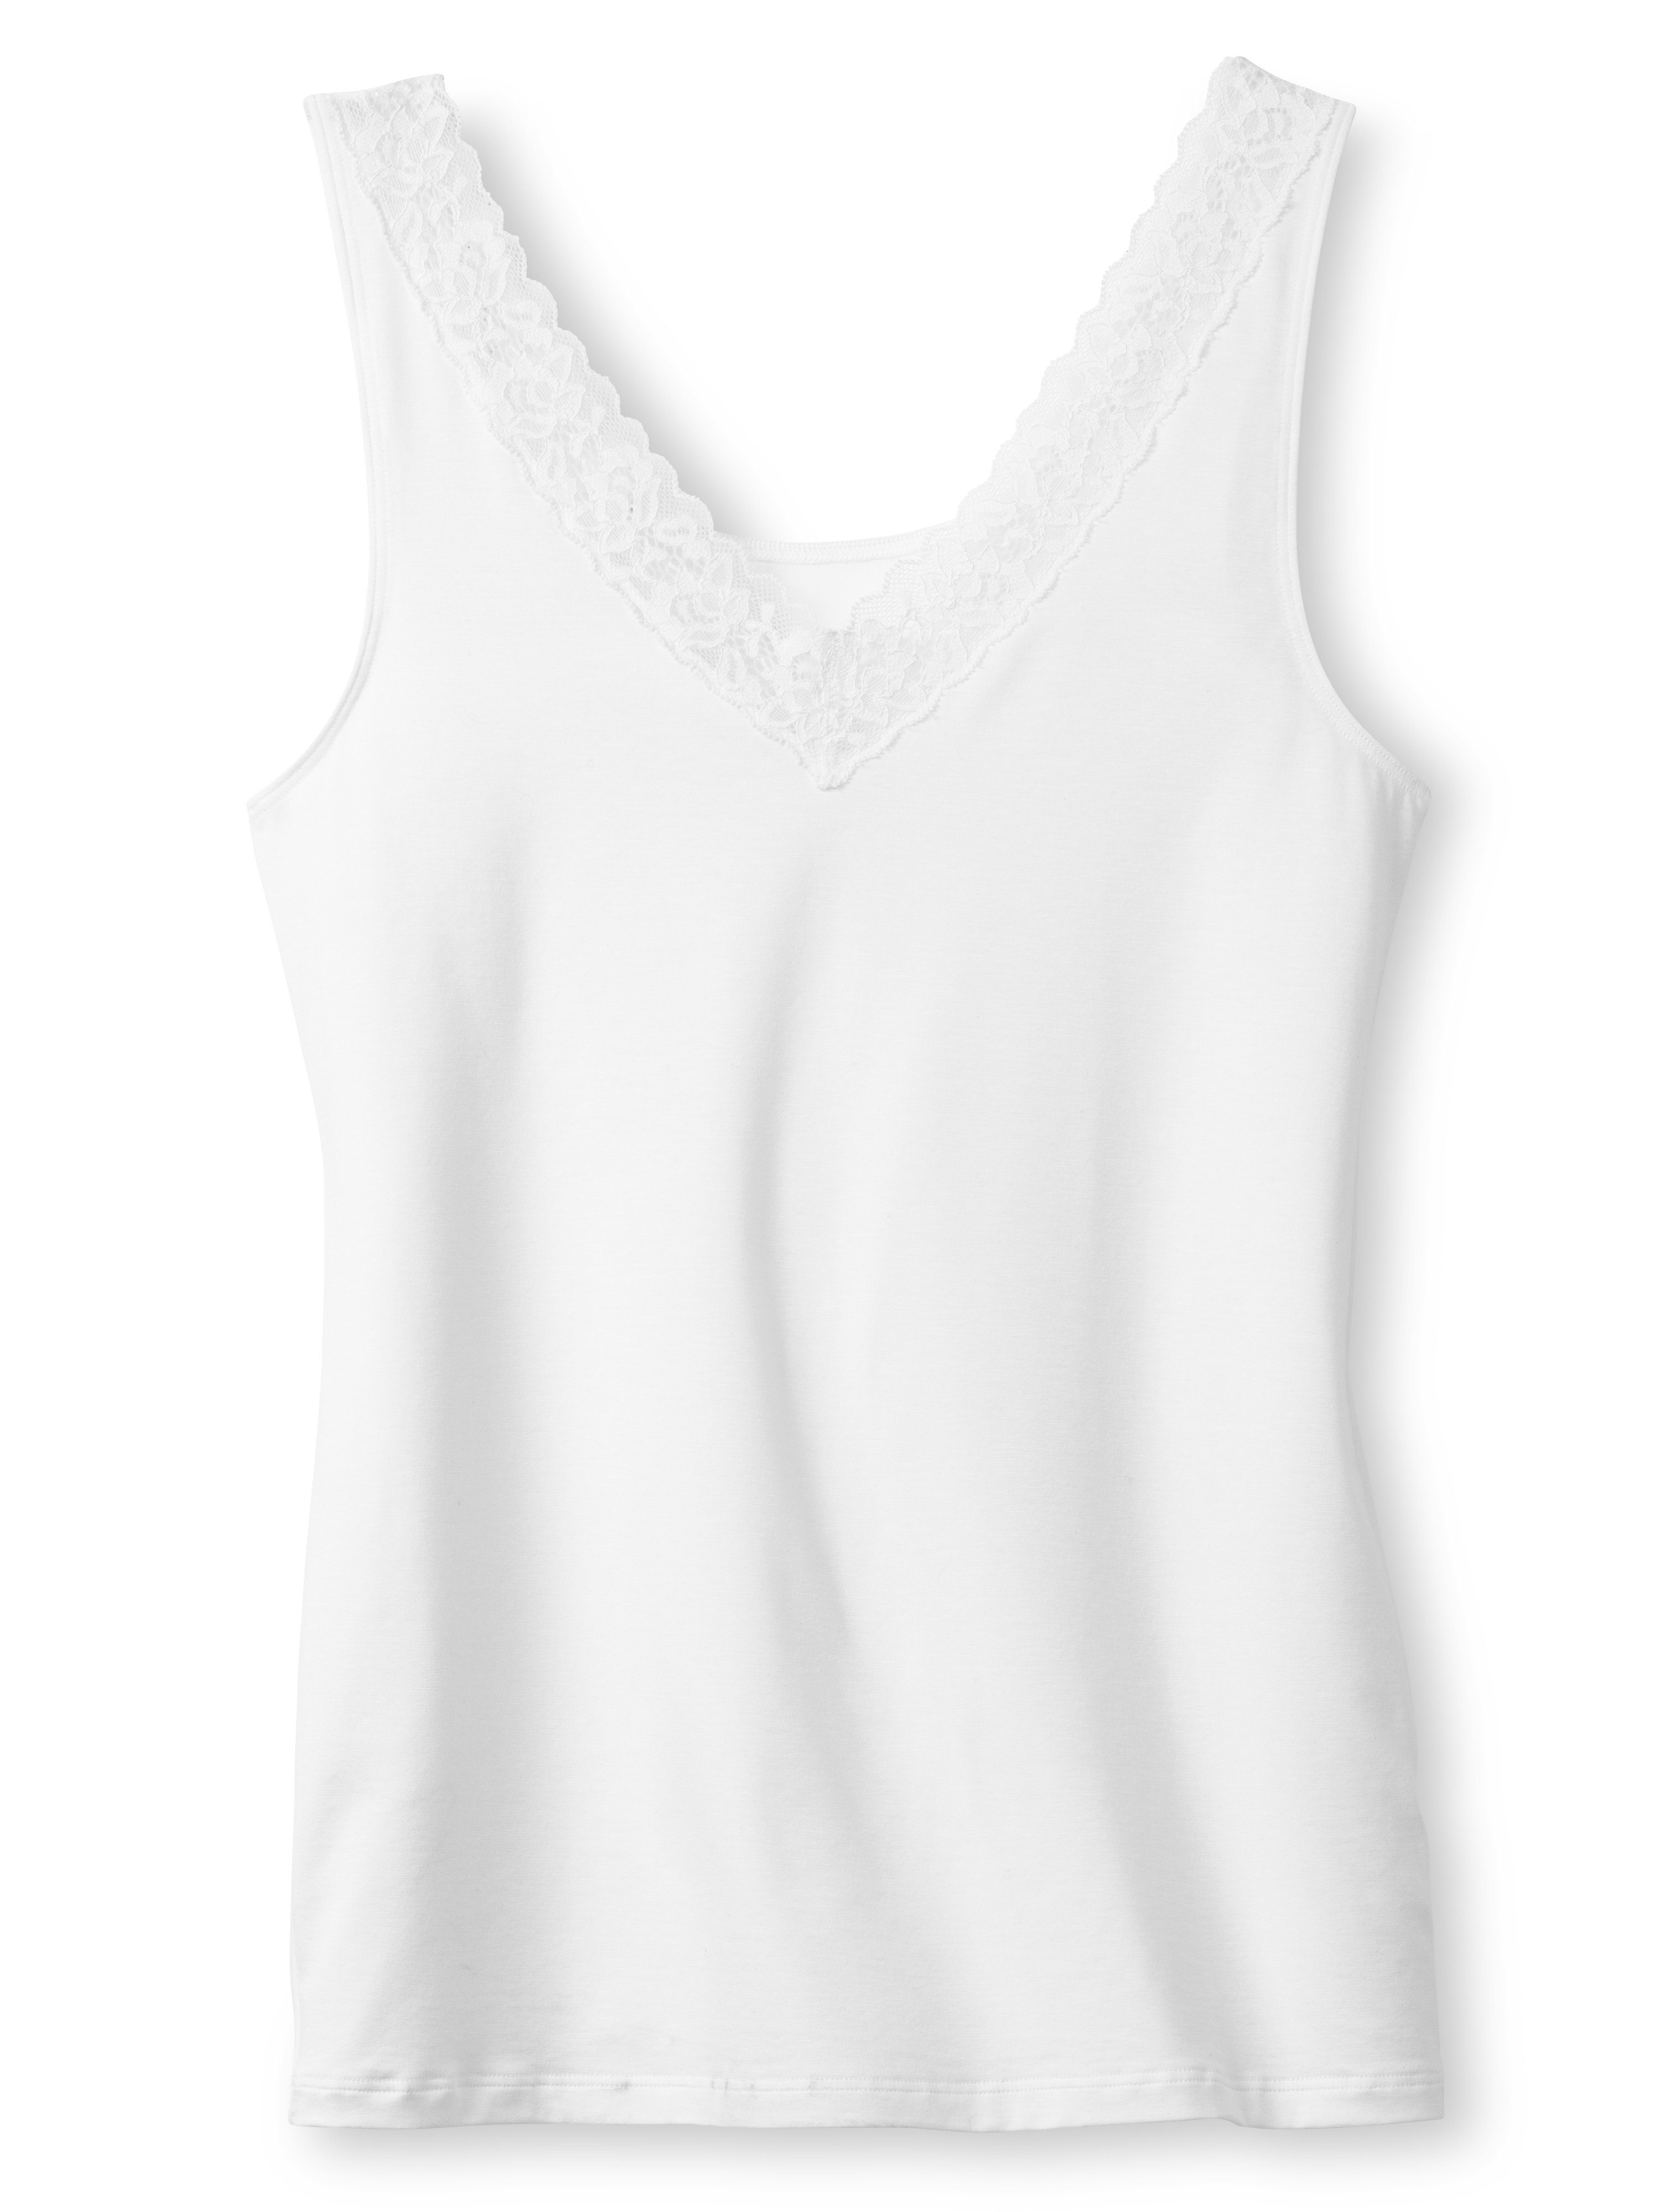 CALIDA Unterhemd Natural mit Comfort schöner Baumwoll-Top Lace Spitze weiss Tank-Top